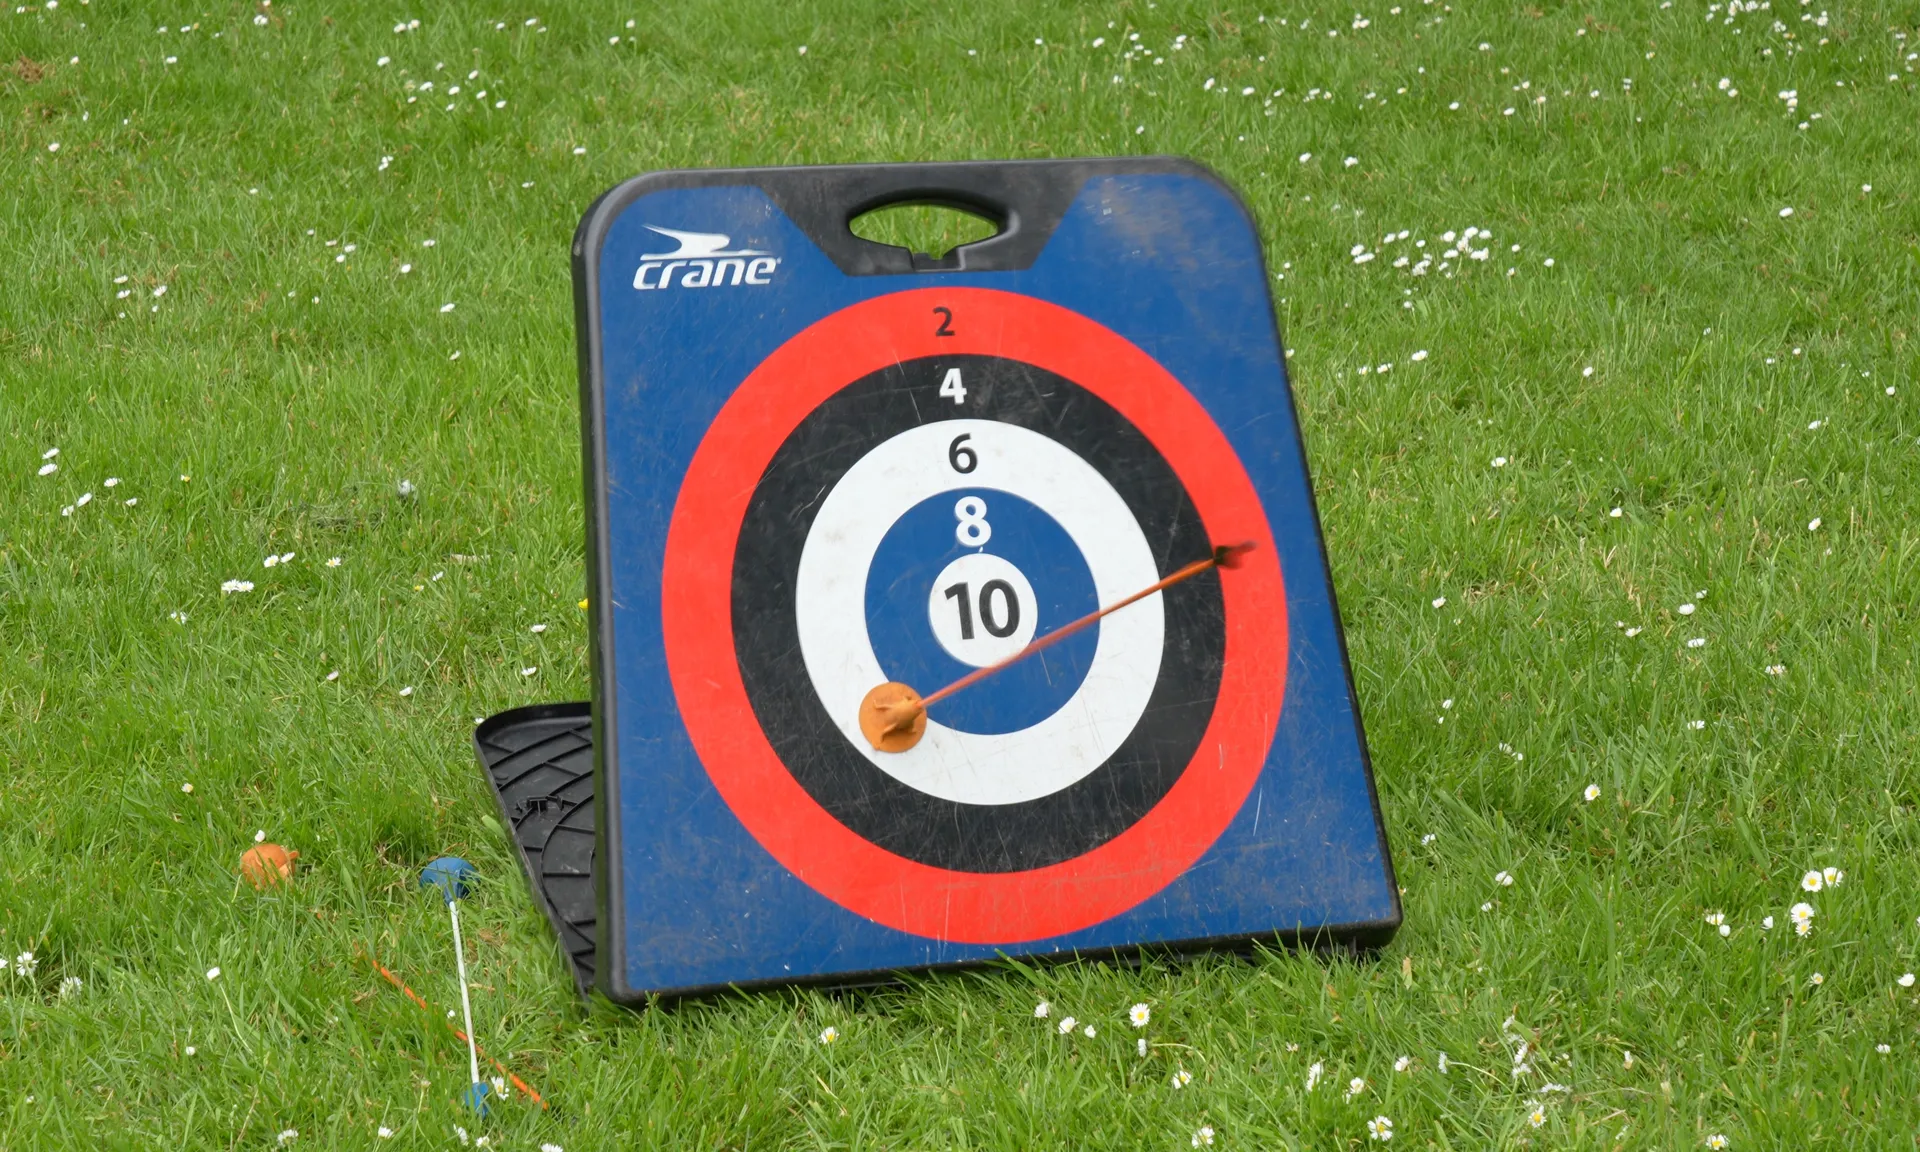 A close up of an archery target.